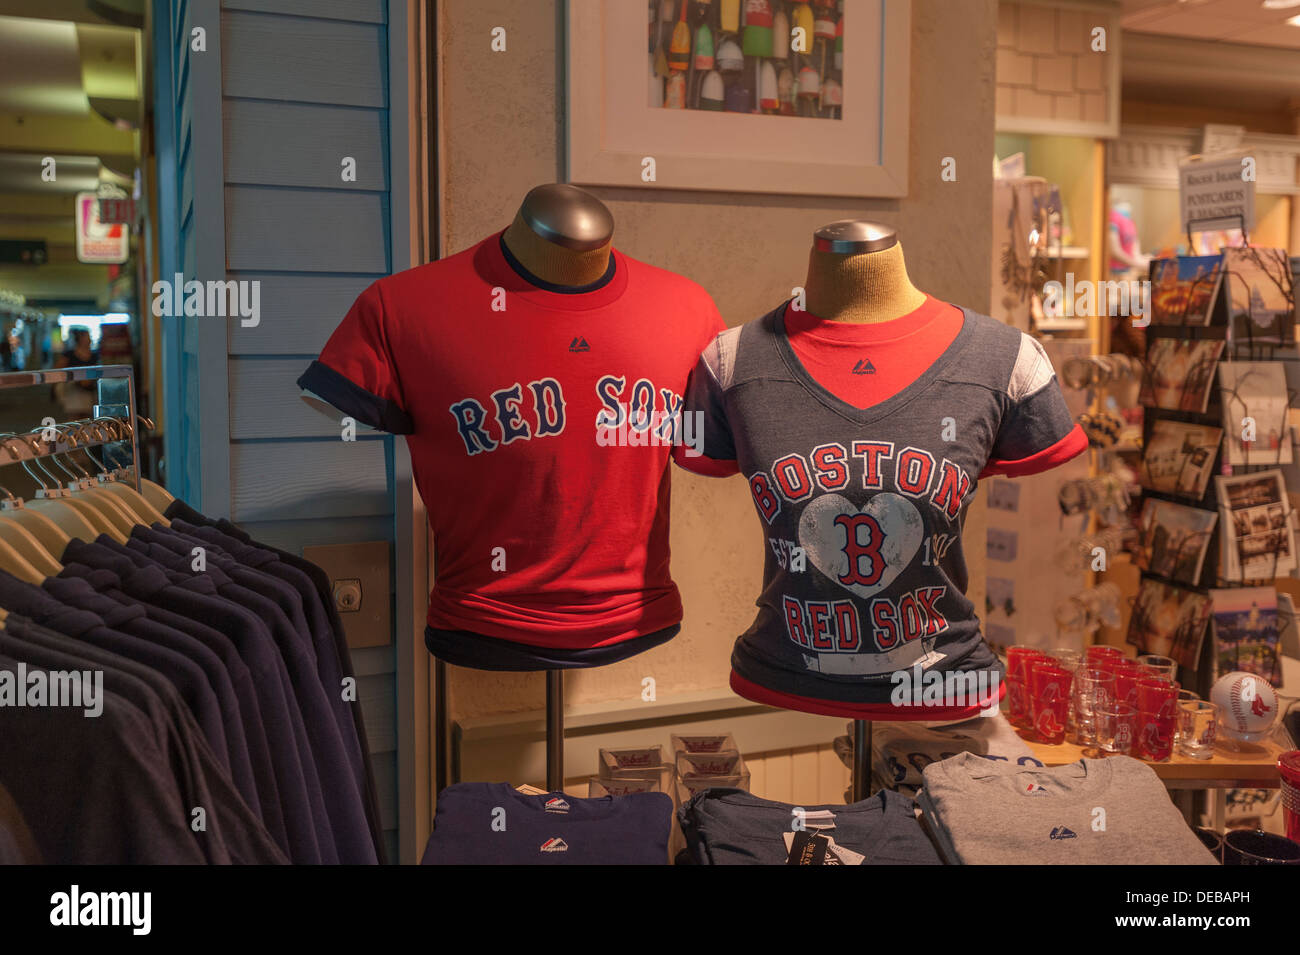 Boston Red Sox baseball Clothing Shirts apparel on display and for